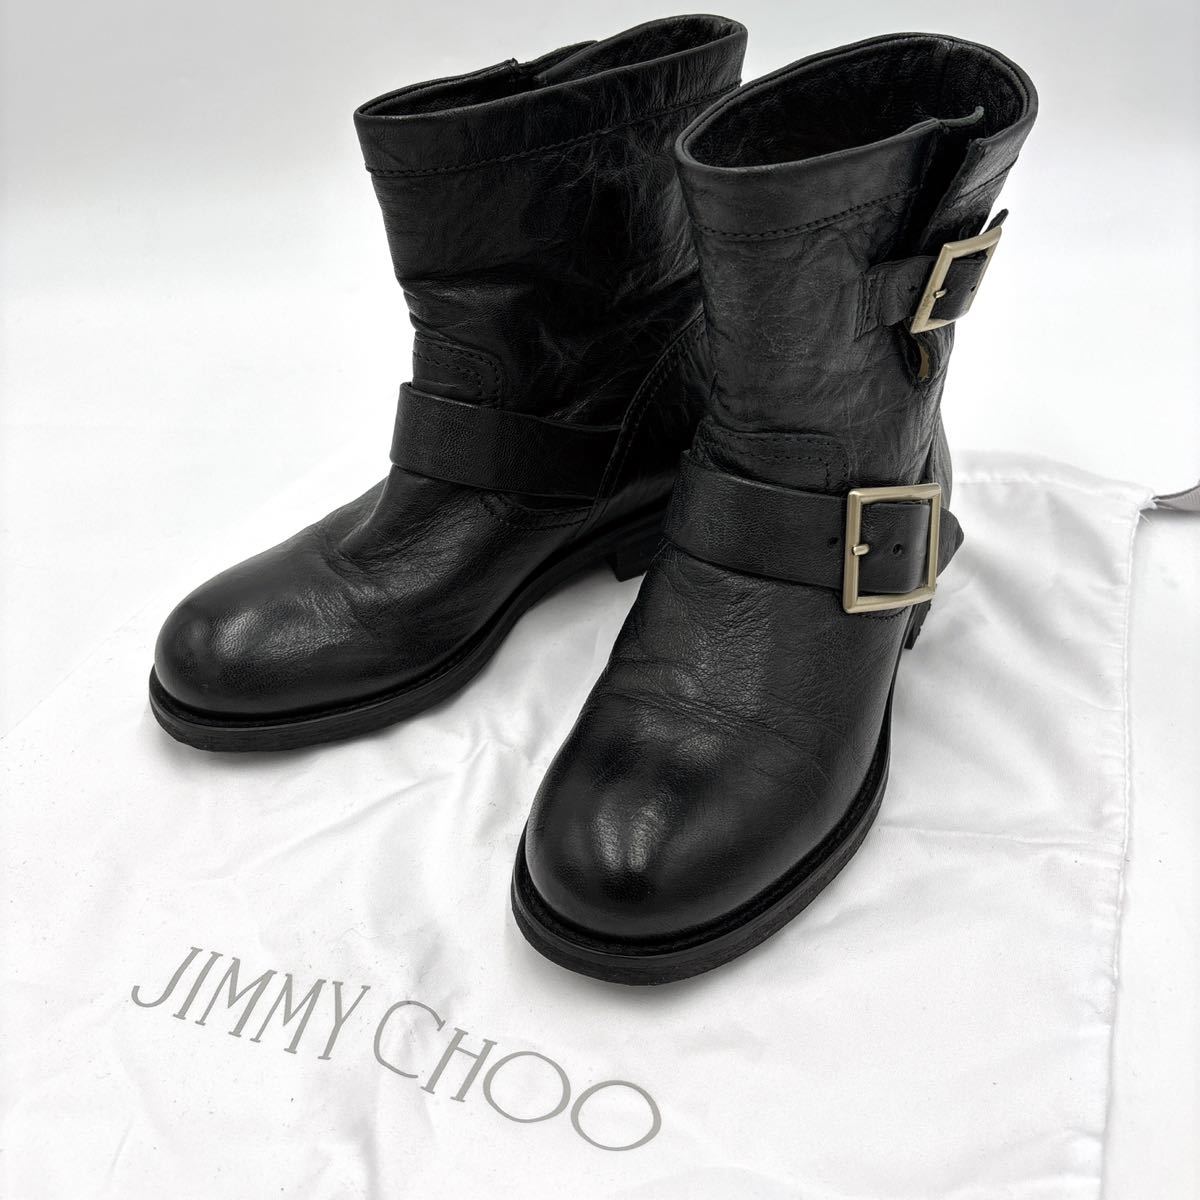 F ＊ 良品 保存袋付き イタリア製 '高級婦人靴' JIMMY CHOO ジミーチュウ 本革 ショート エンジニアブーツ 革靴 EU35 22cm レディース